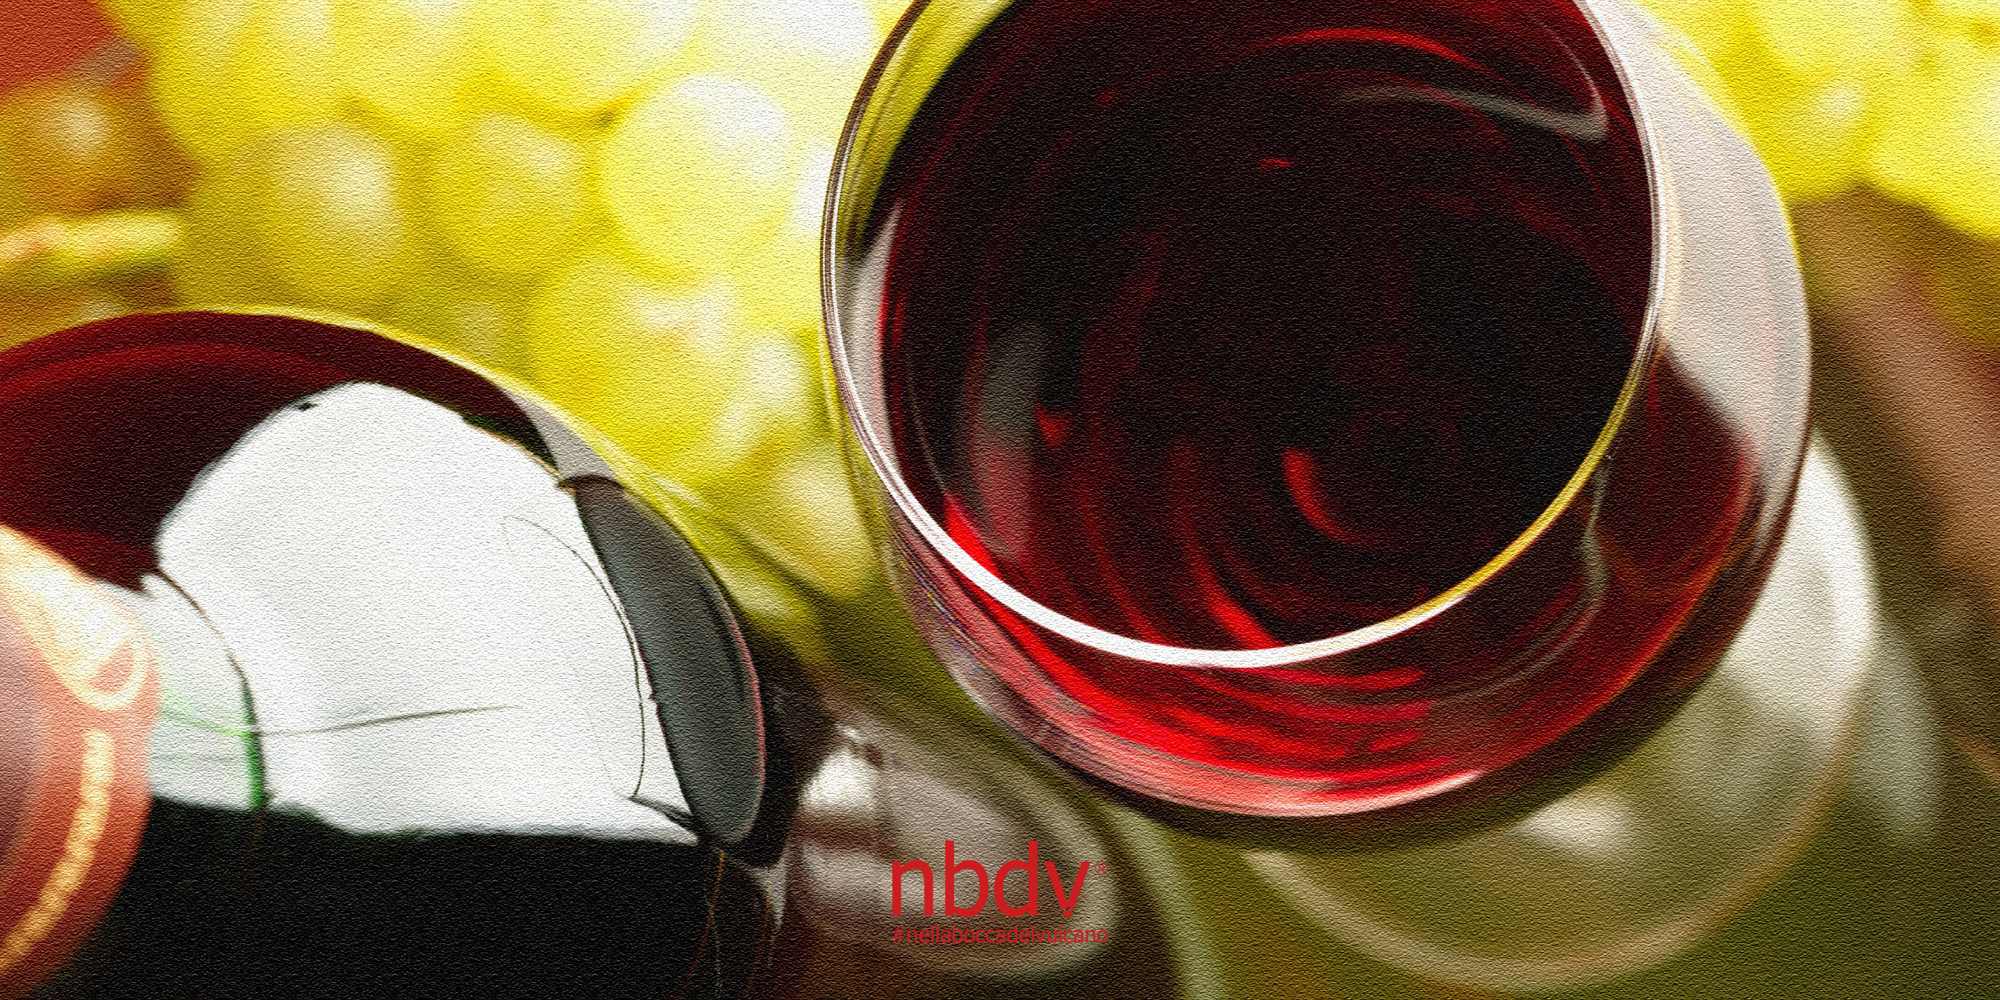 red-wine-vino-rosso-campania-lacryma-christi-napoli-nbdv